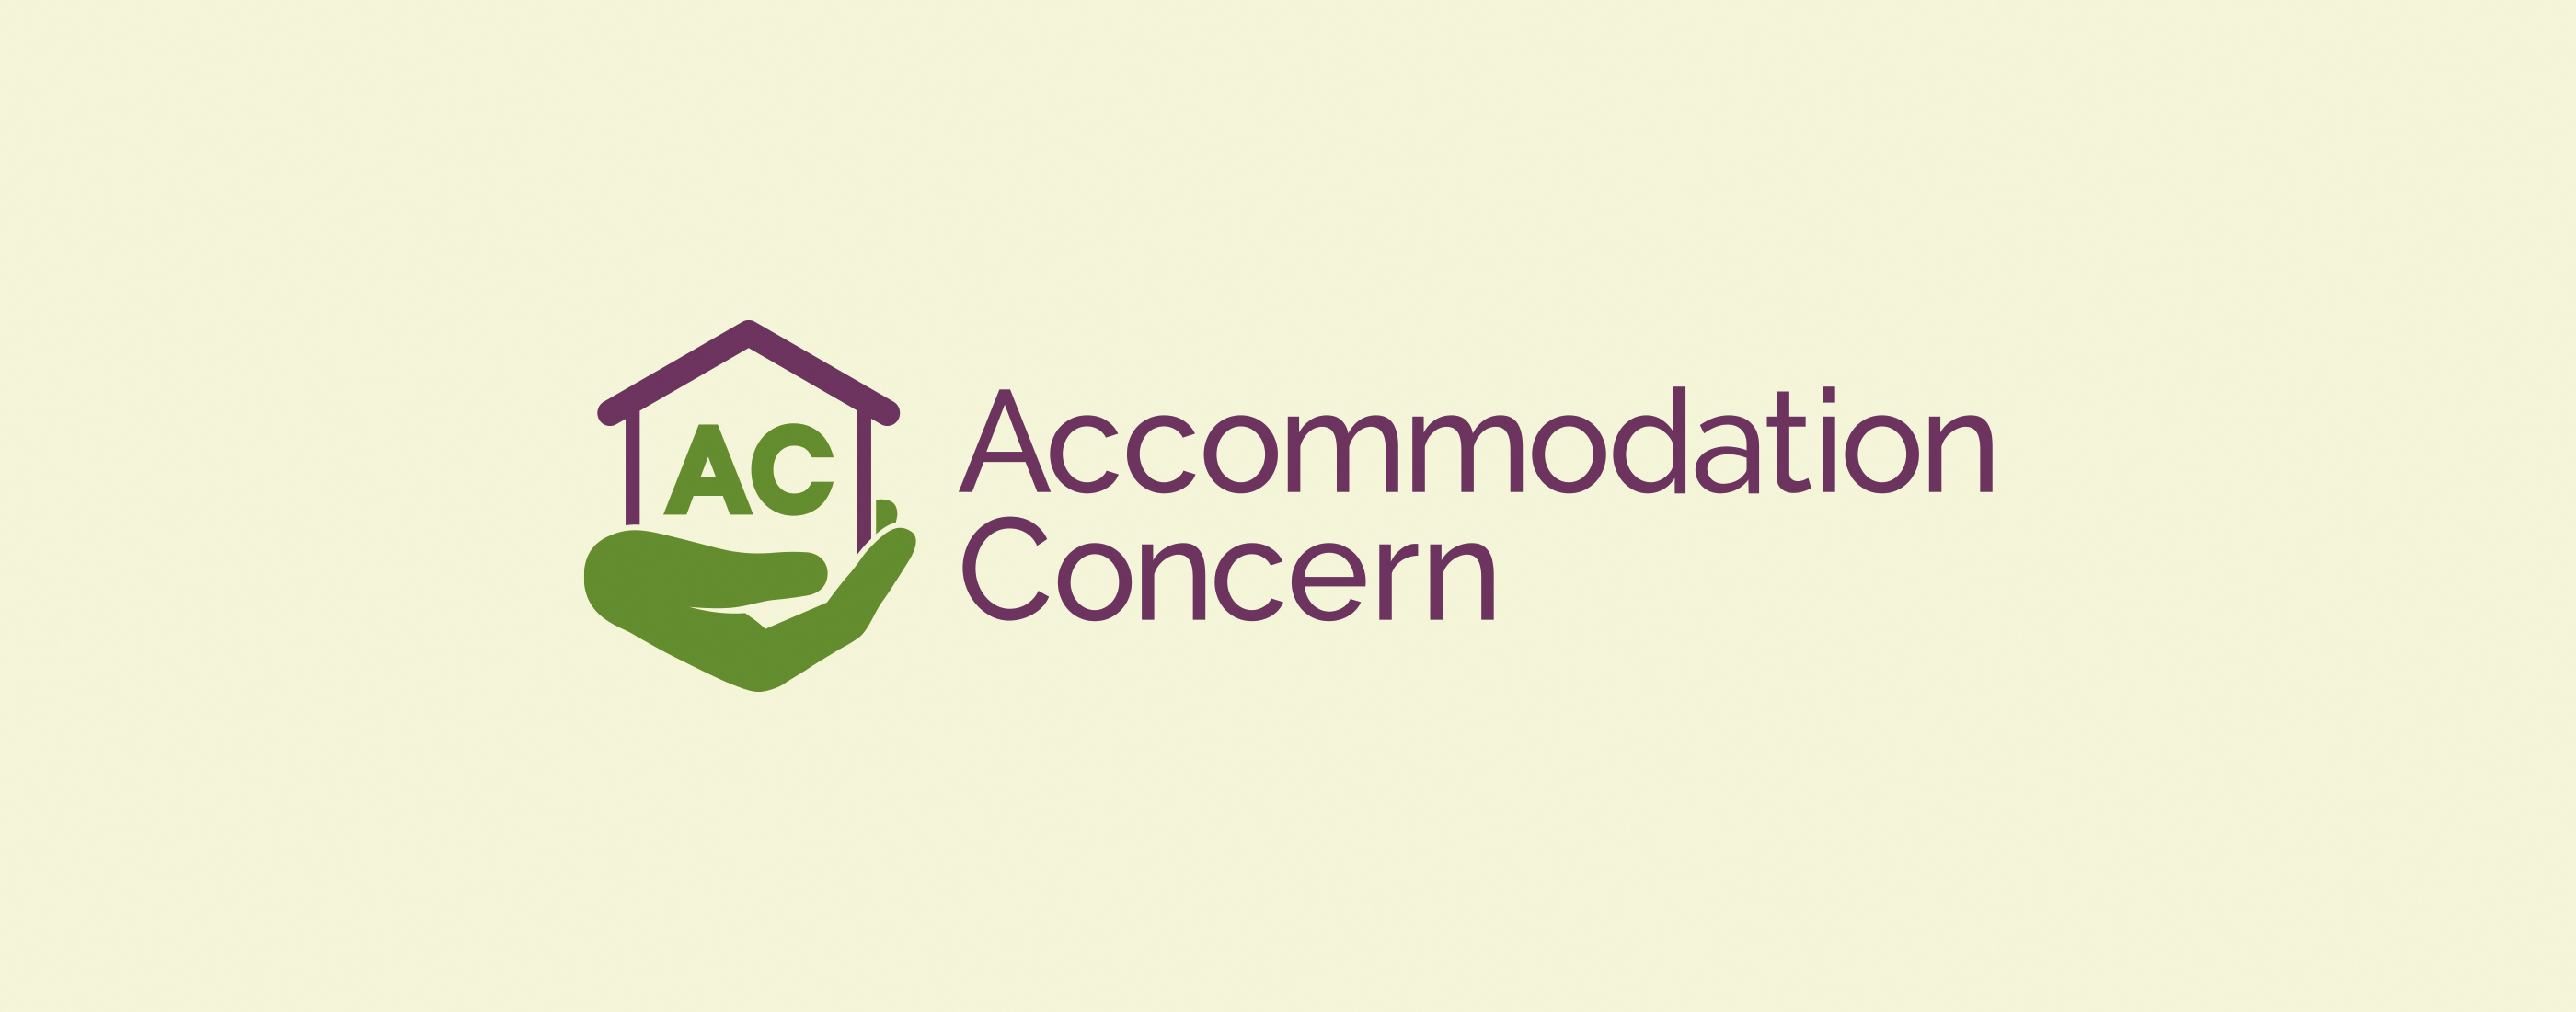 Accommodation Concern, branding print and digital